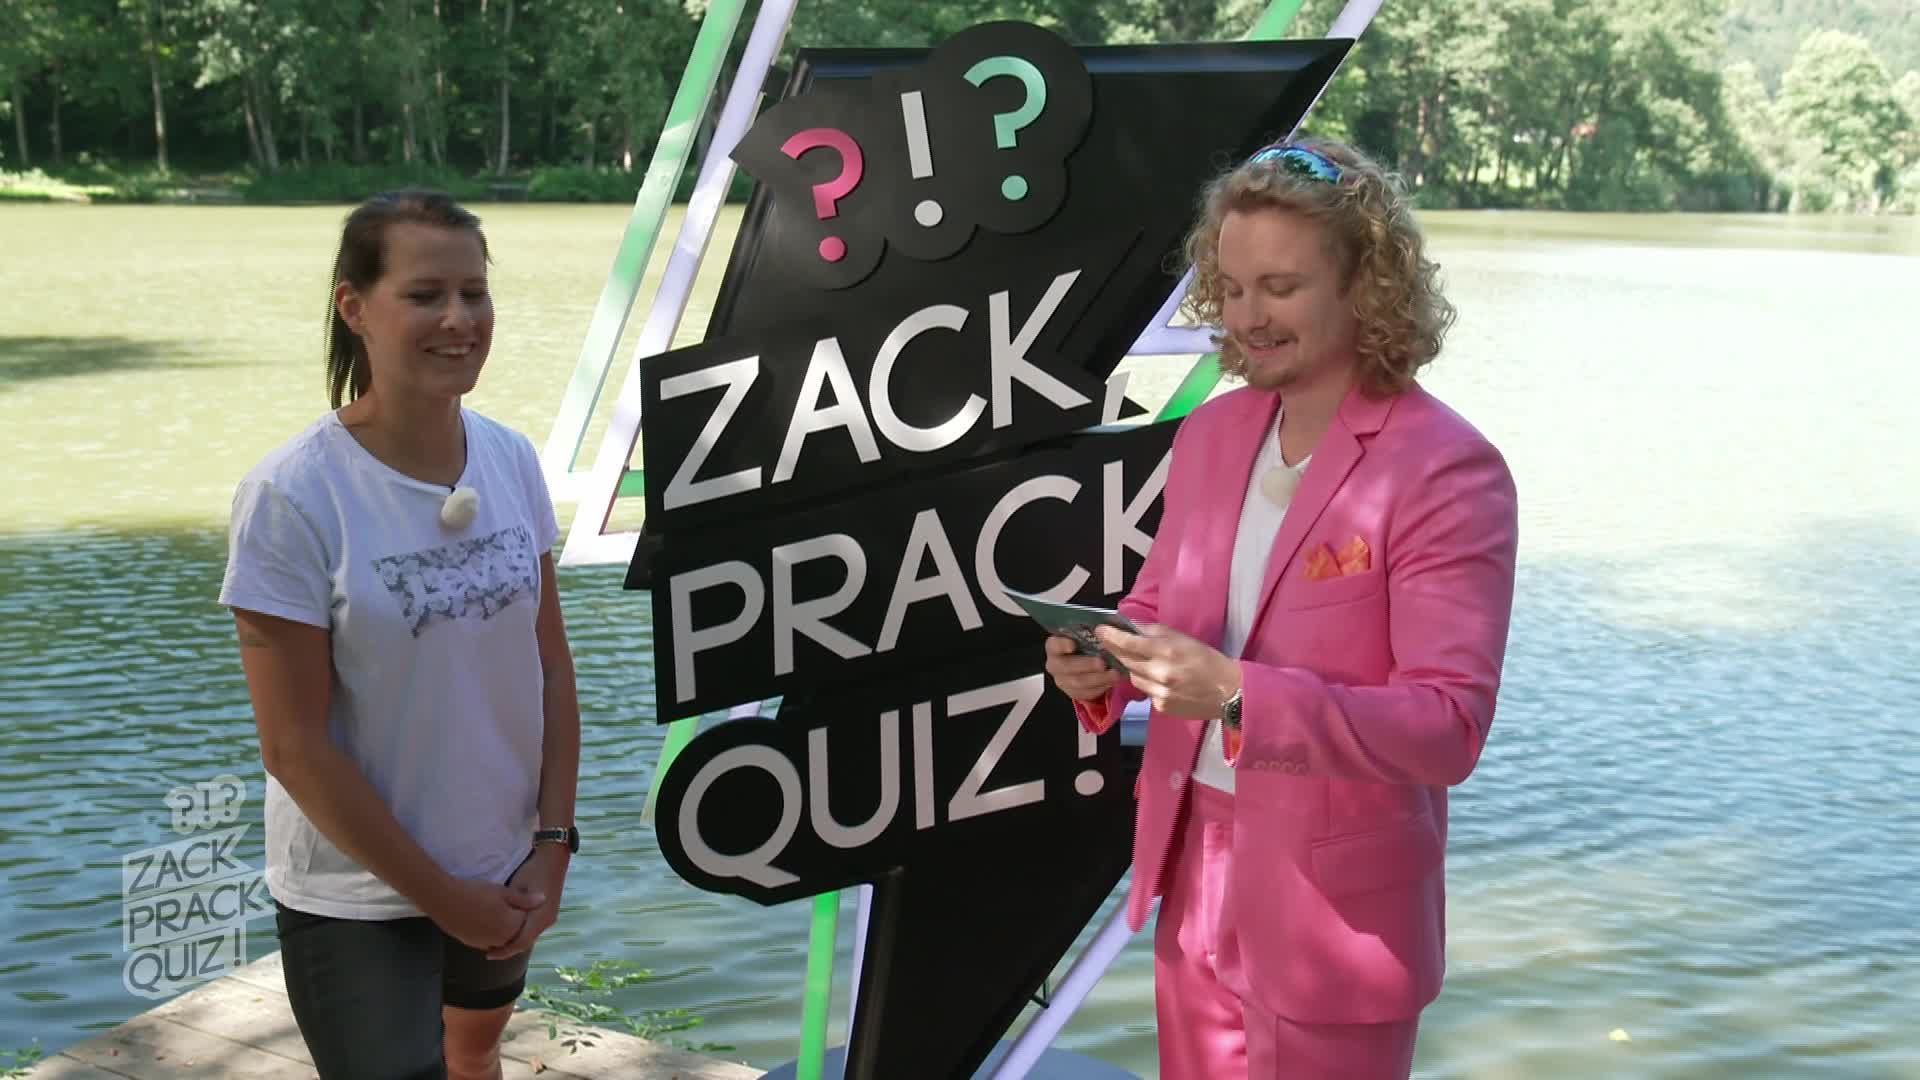 Zack, Prack, Quiz - Staffel 1 Folge 4